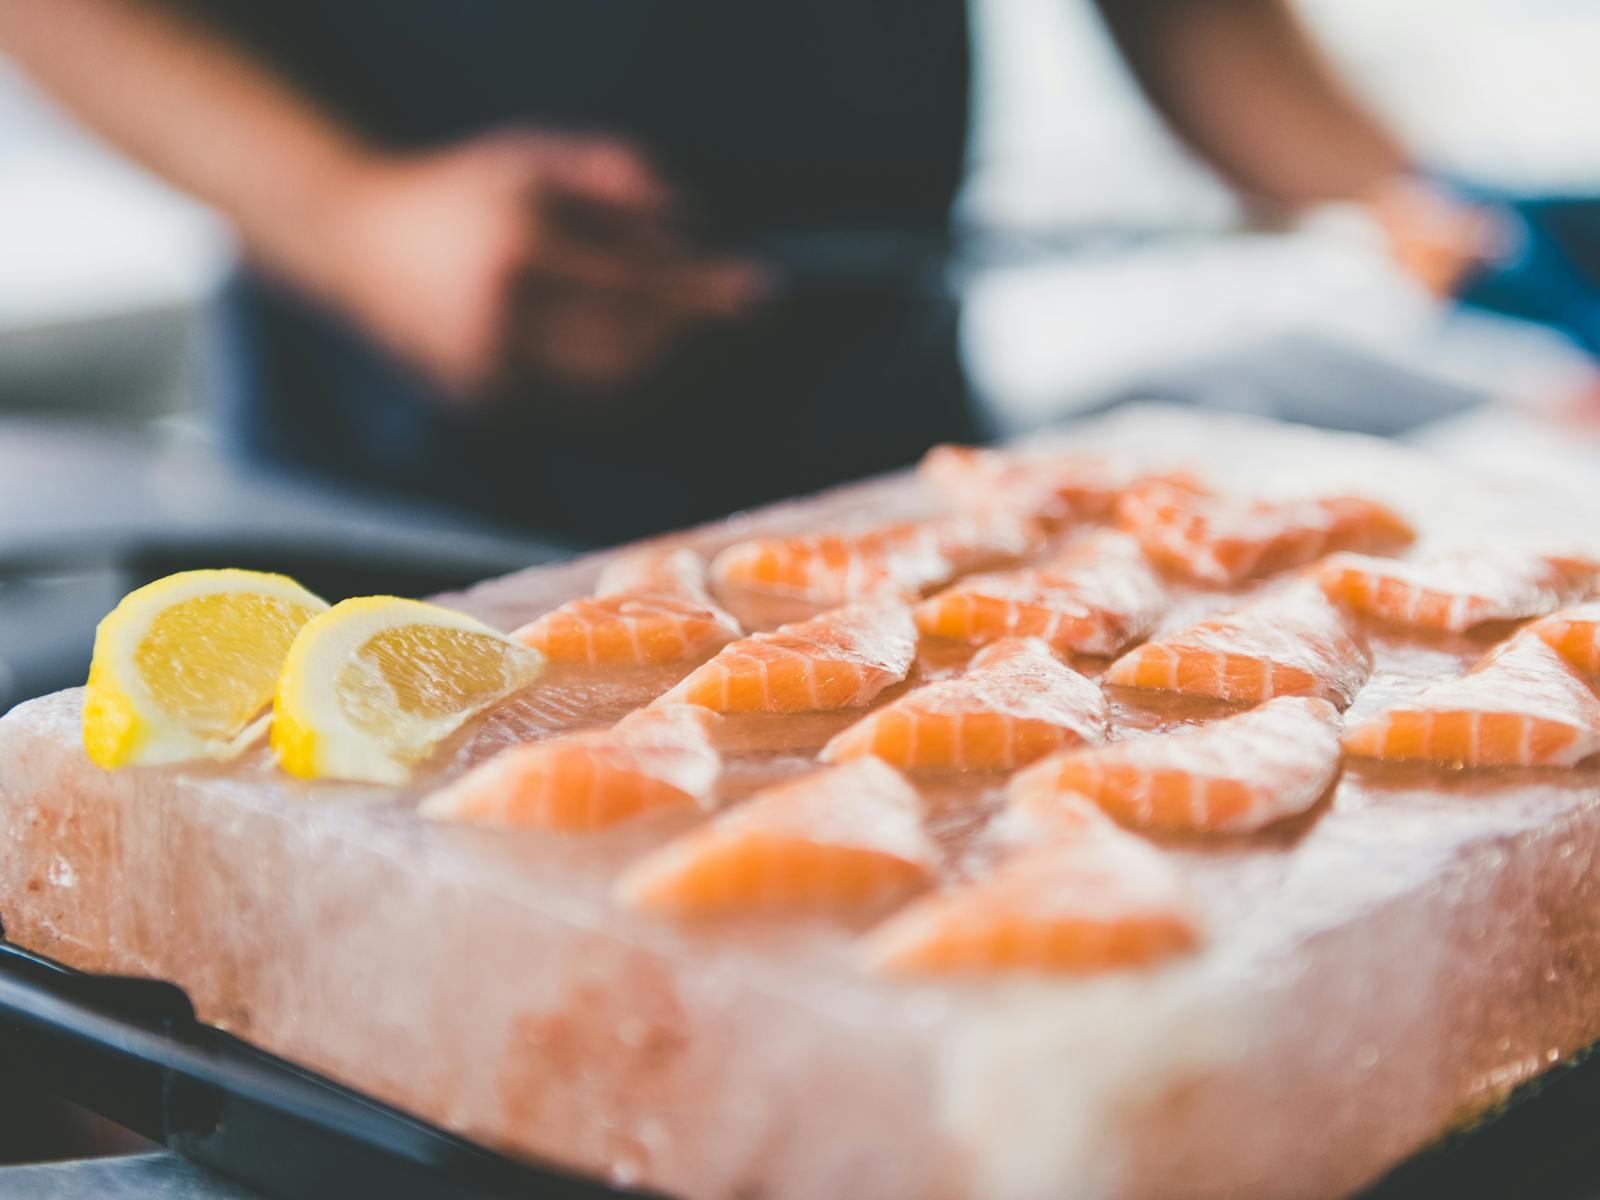 Our chef serves fresh Atlantic salmon sashimi style on a pink slab of rock salt with lemon